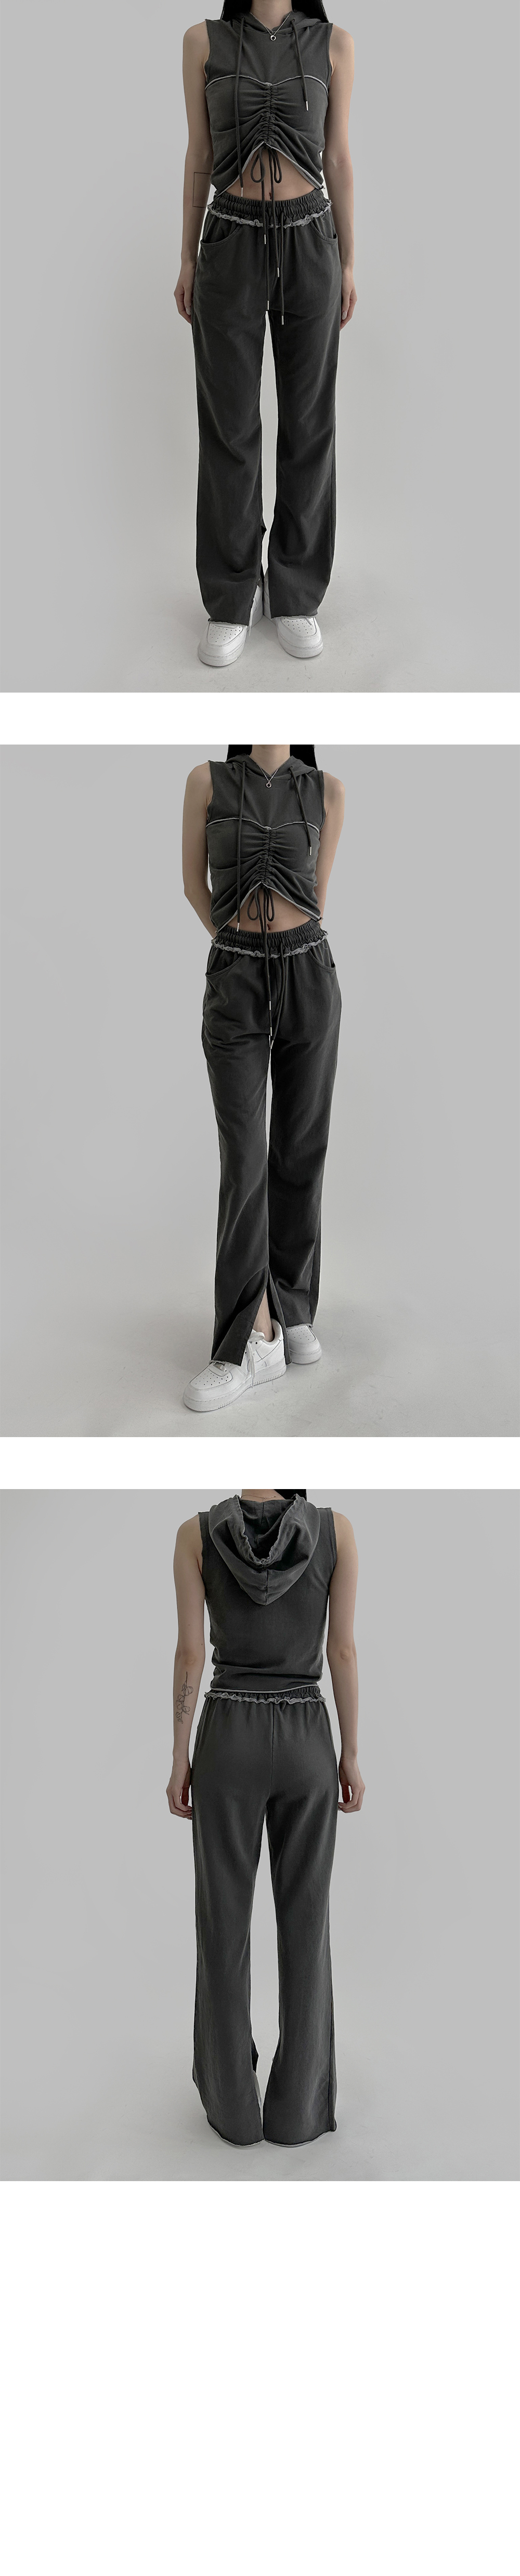 suspenders skirt/pants model image-S1L6